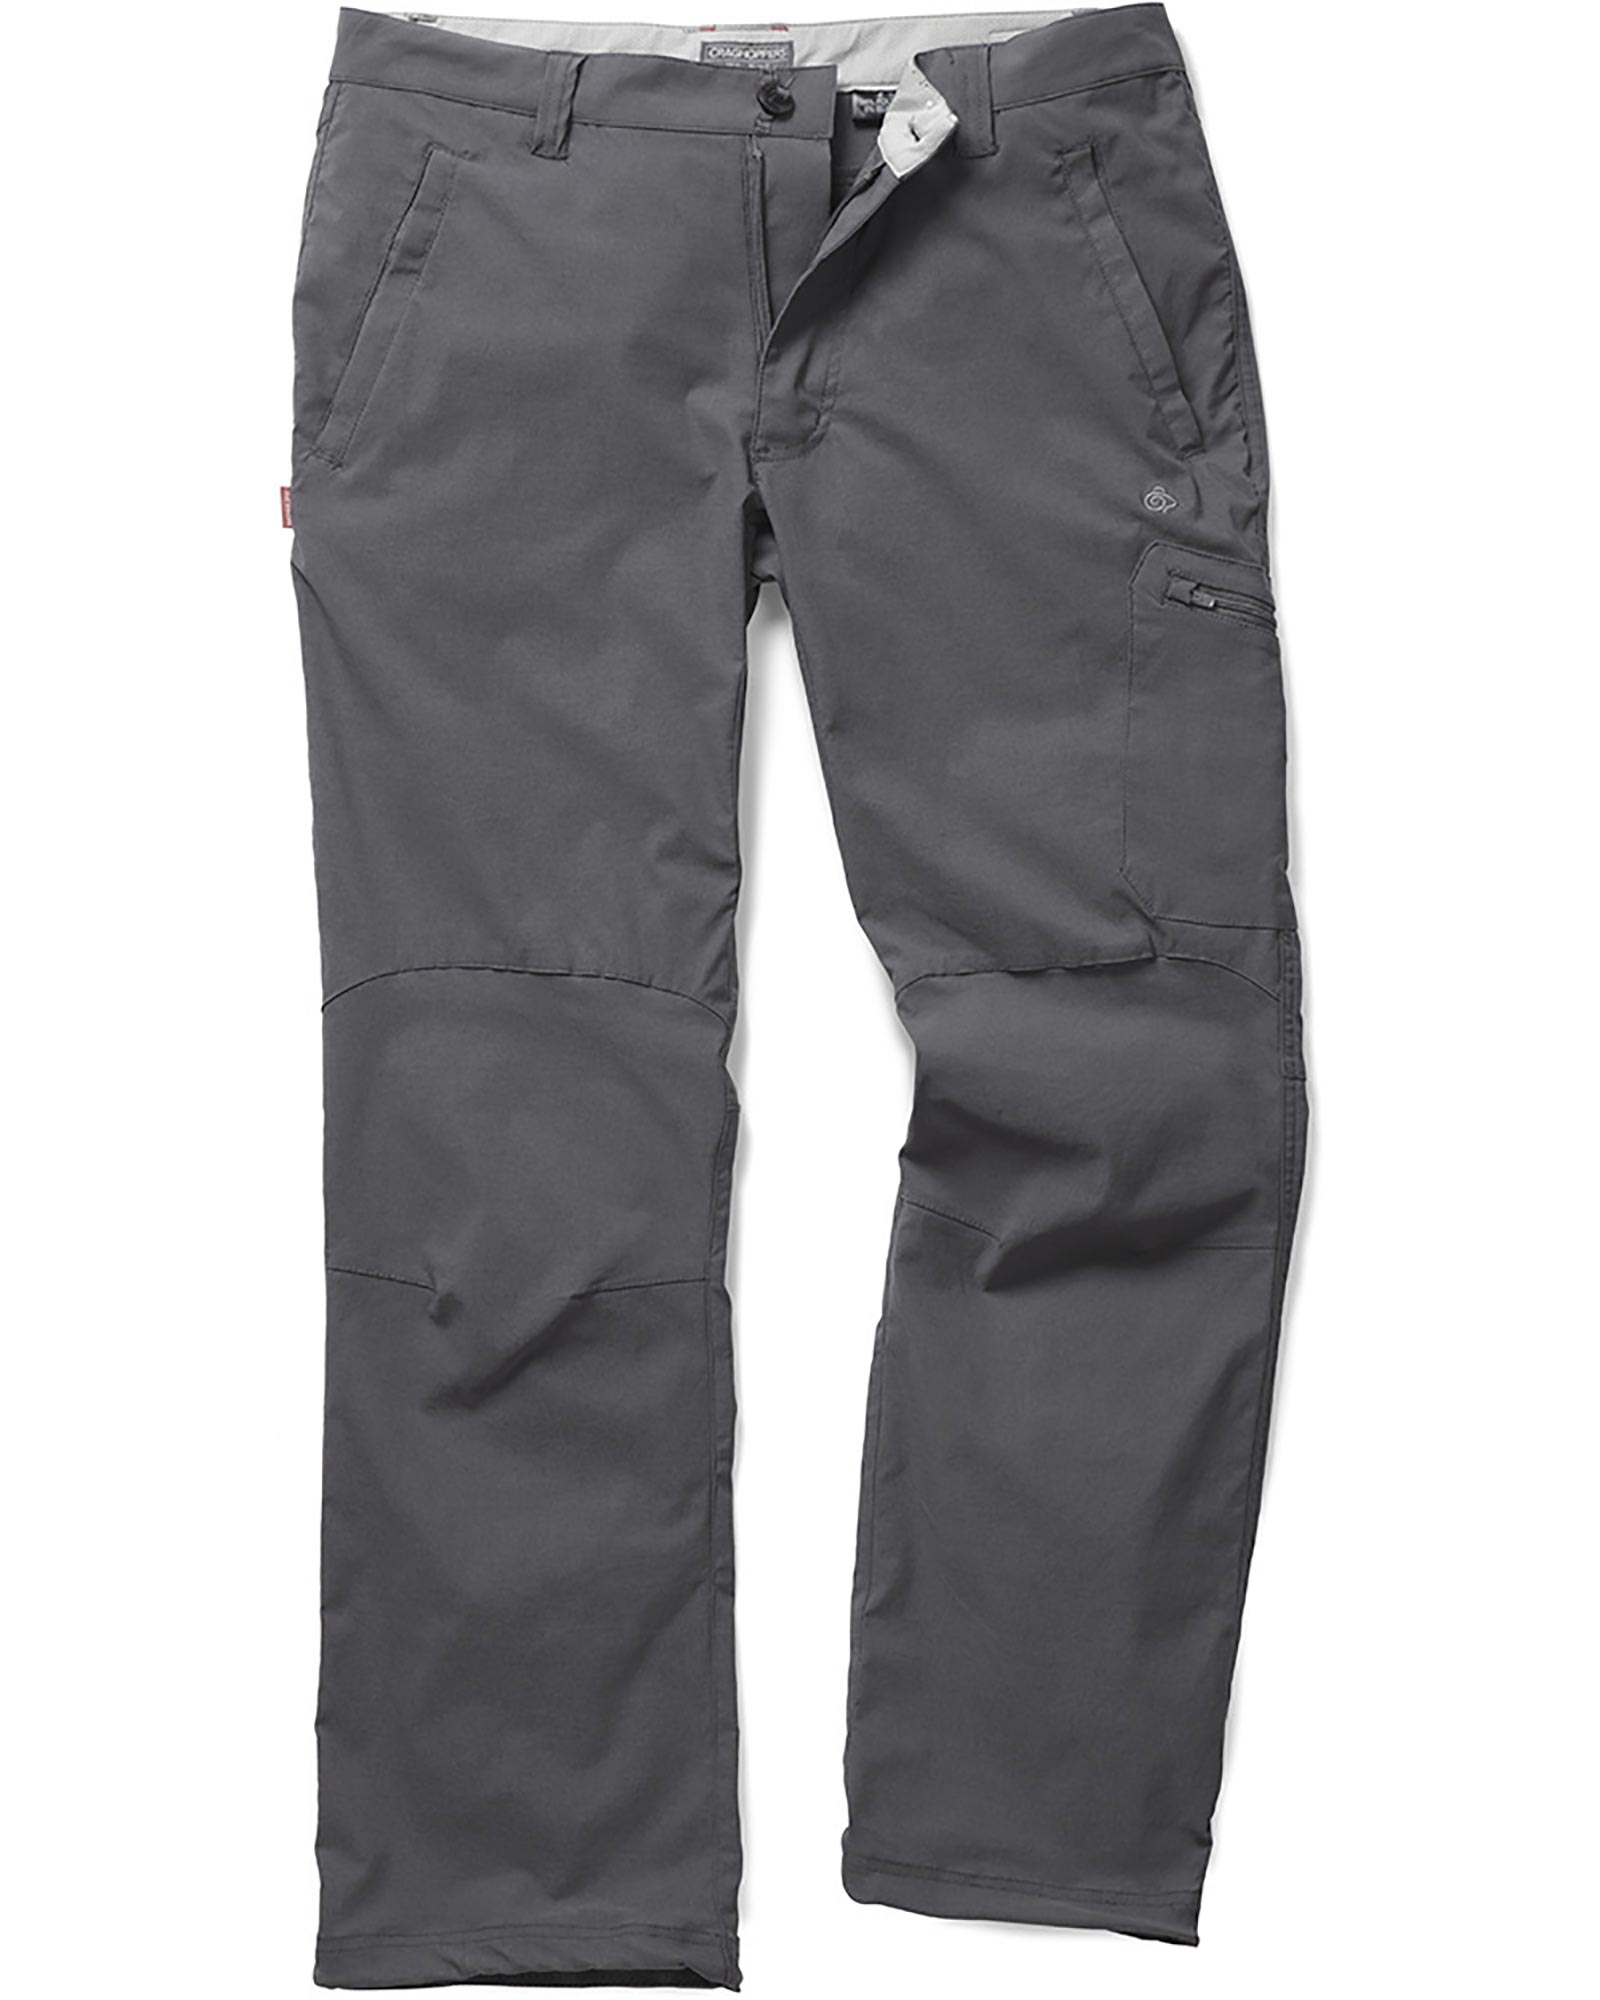 Craghoppers NosiLife Cargo Trousers  Walking trousers Mens  Buy online   Bergfreundeeu